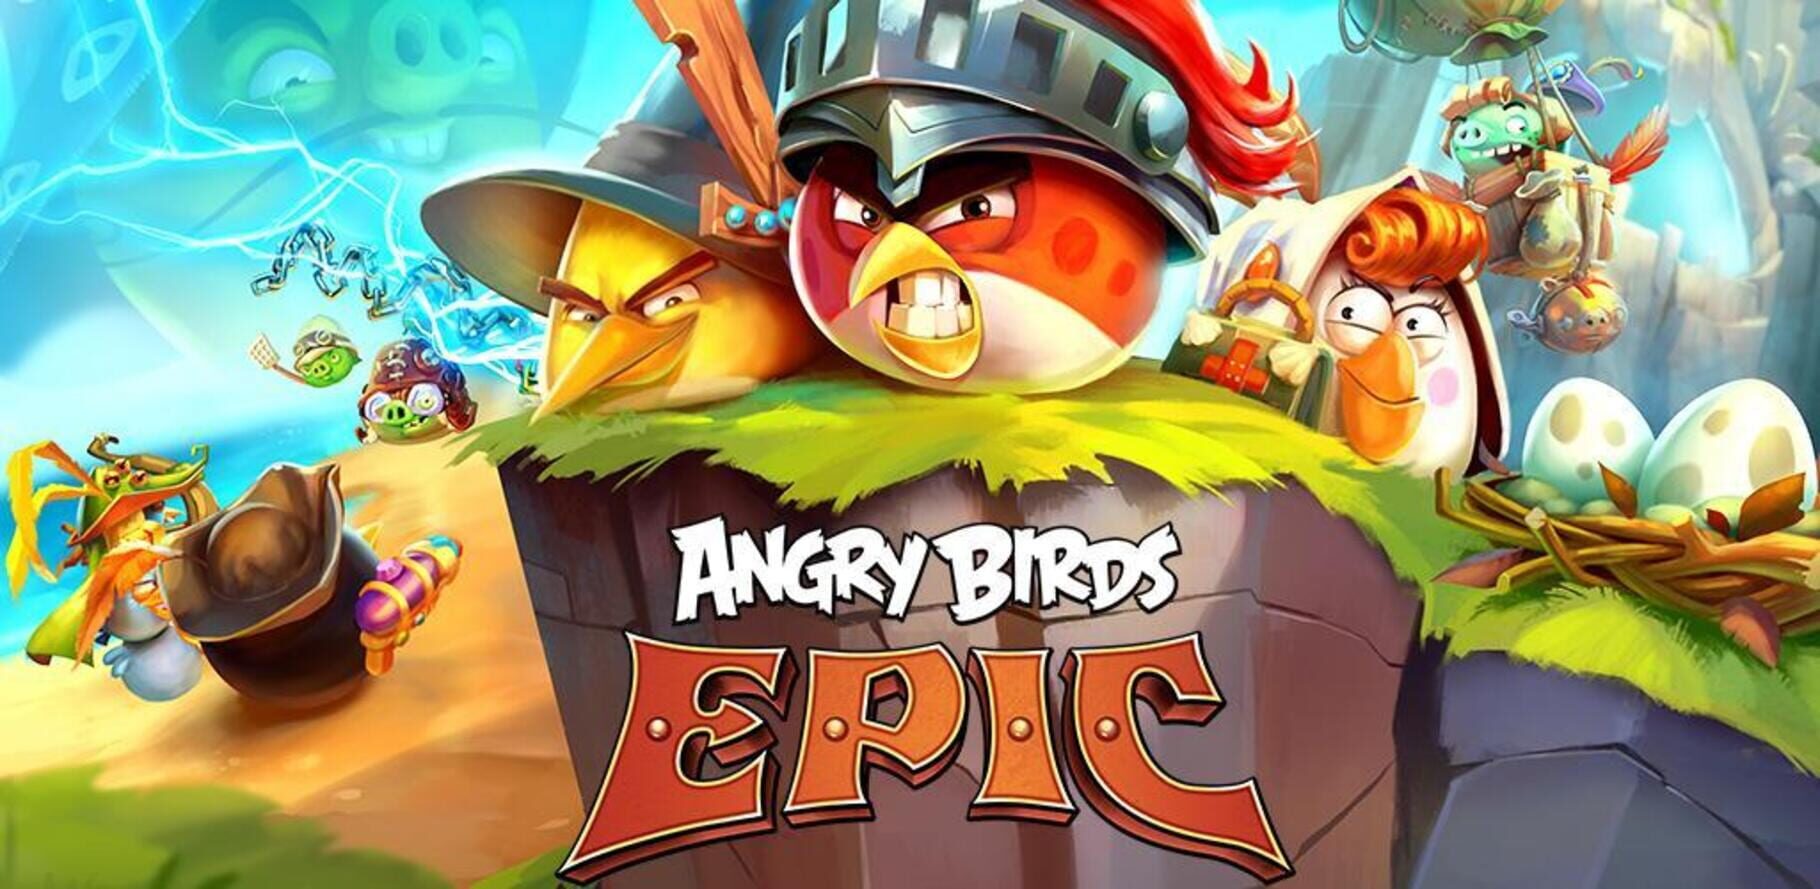 Arte - Angry Birds Epic